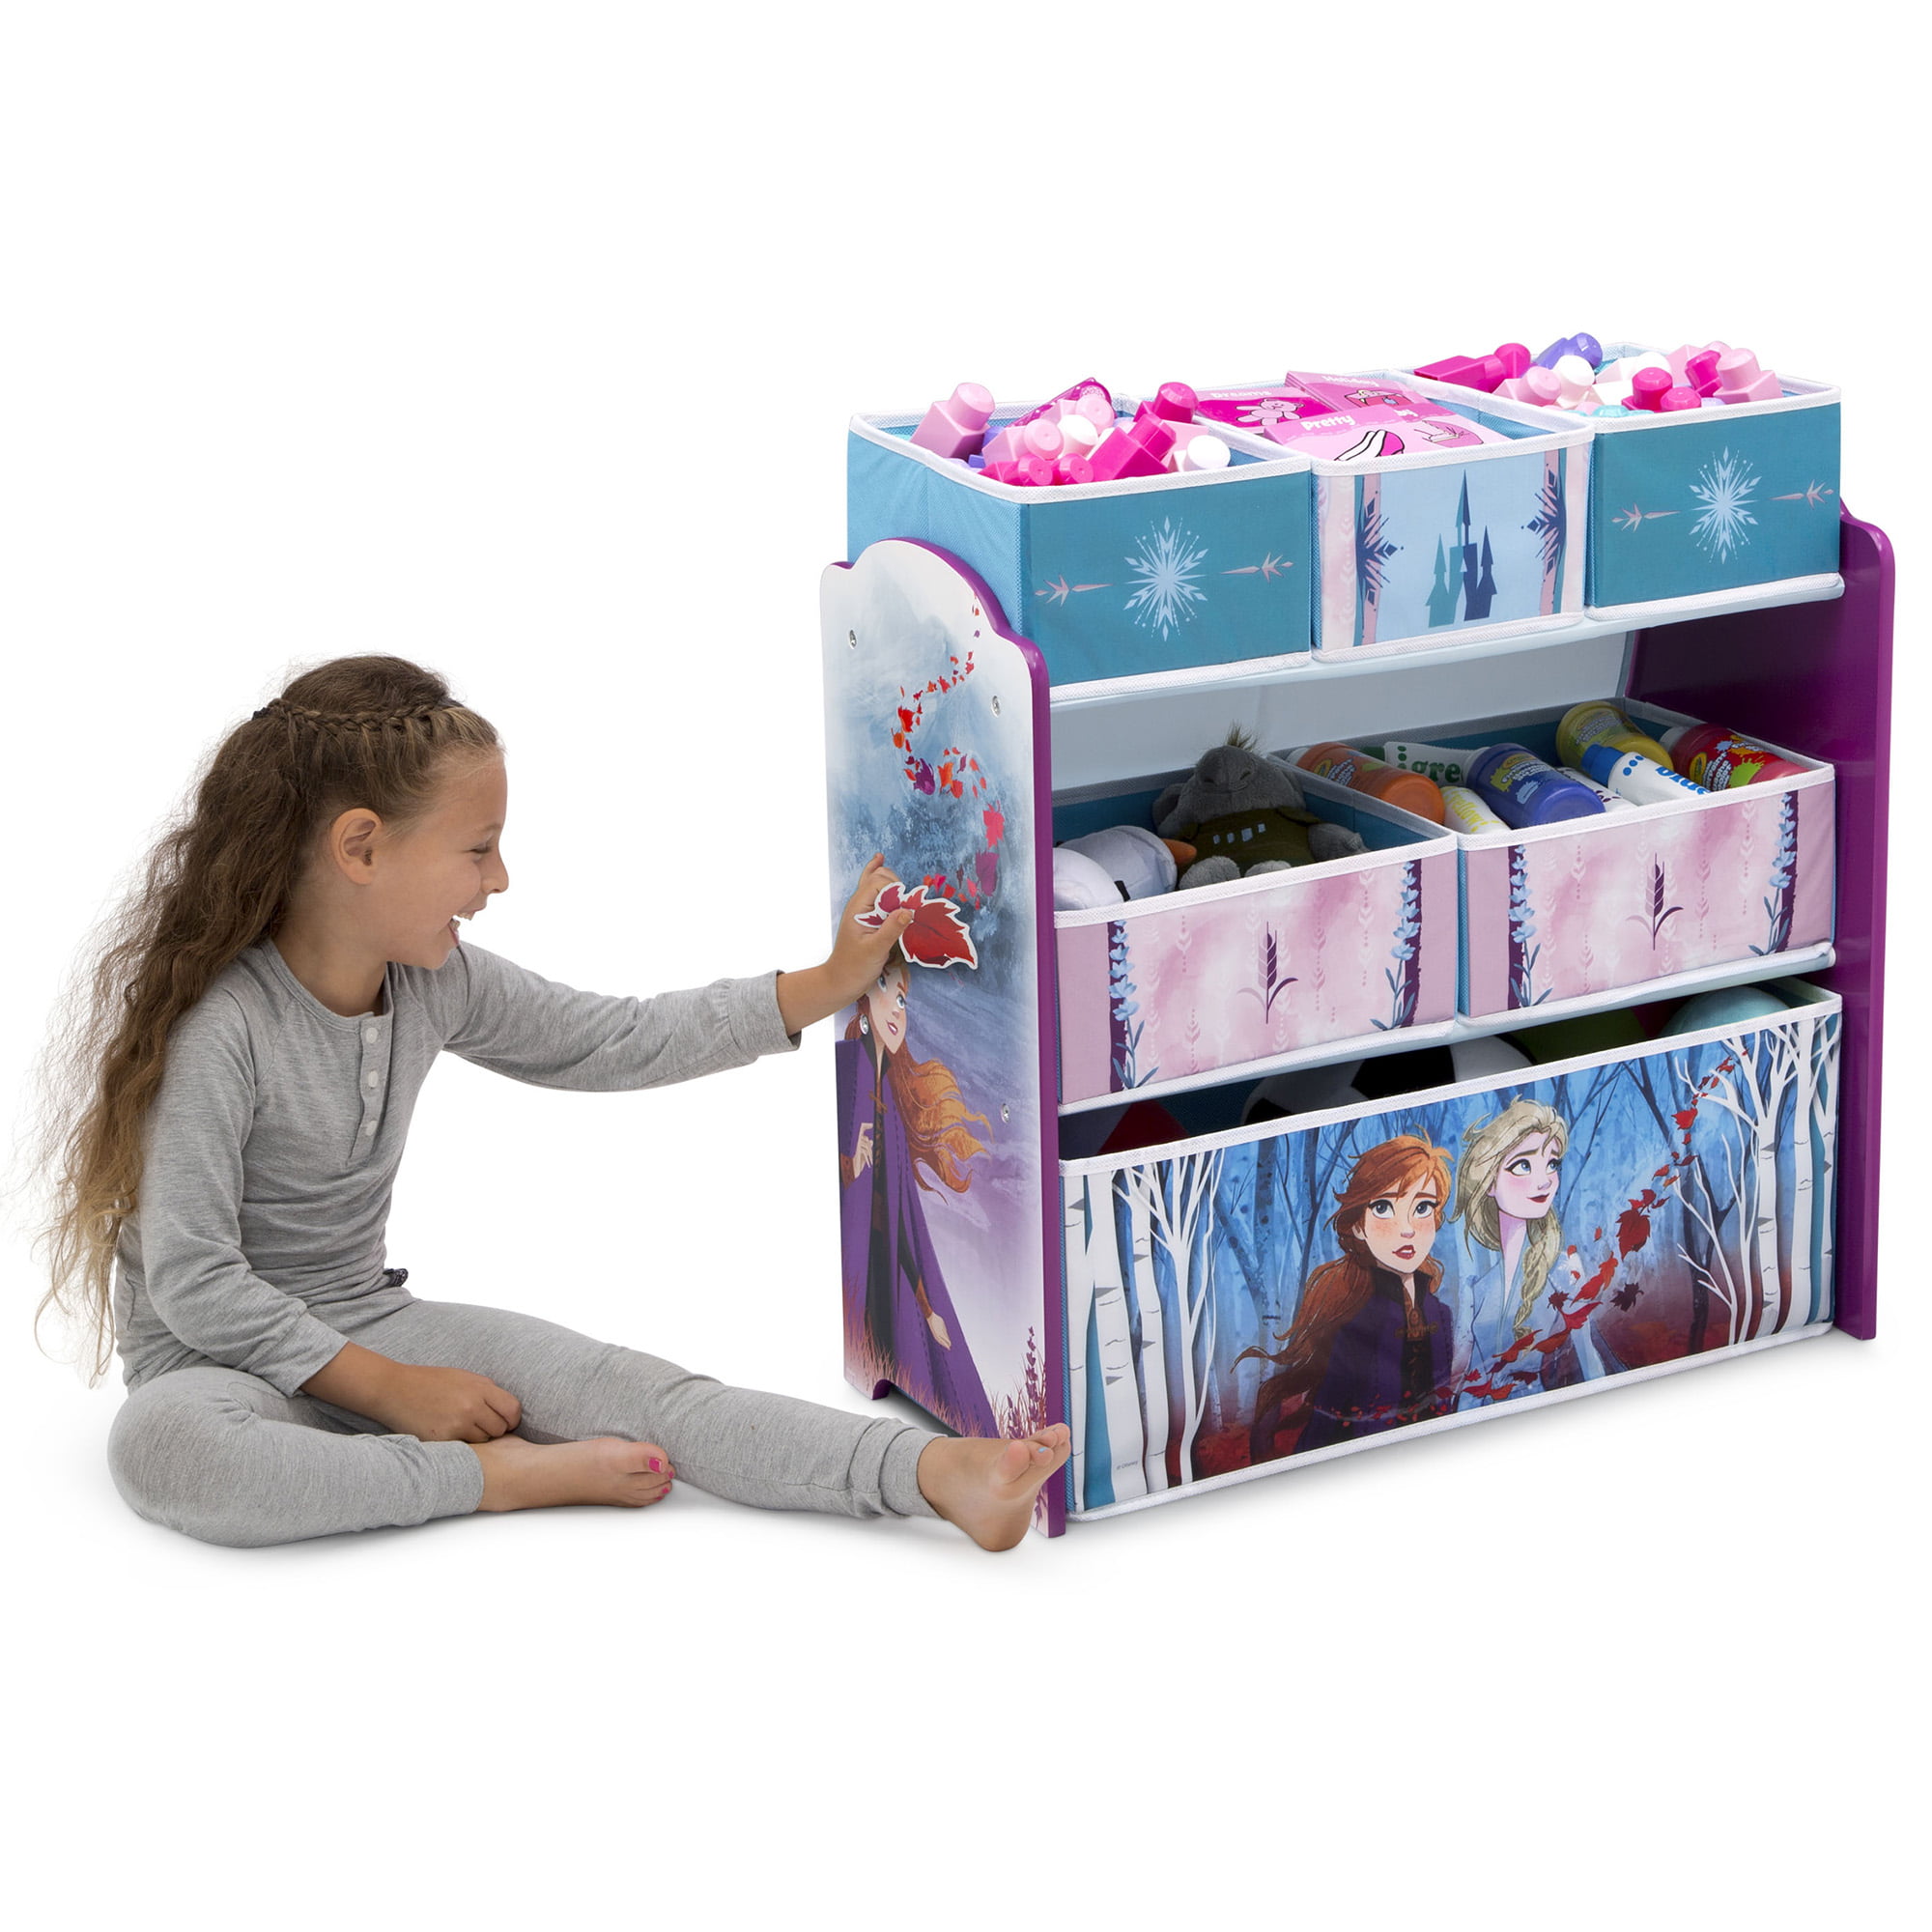 Disney Frozen Ii 4 Piece Room In A Box Bedroom Set By Delta Children Includes Sleep Play Toddler Bed 6 Bin Design Store Toy Organizer And Desk With Chair Walmart Com Walmart Com